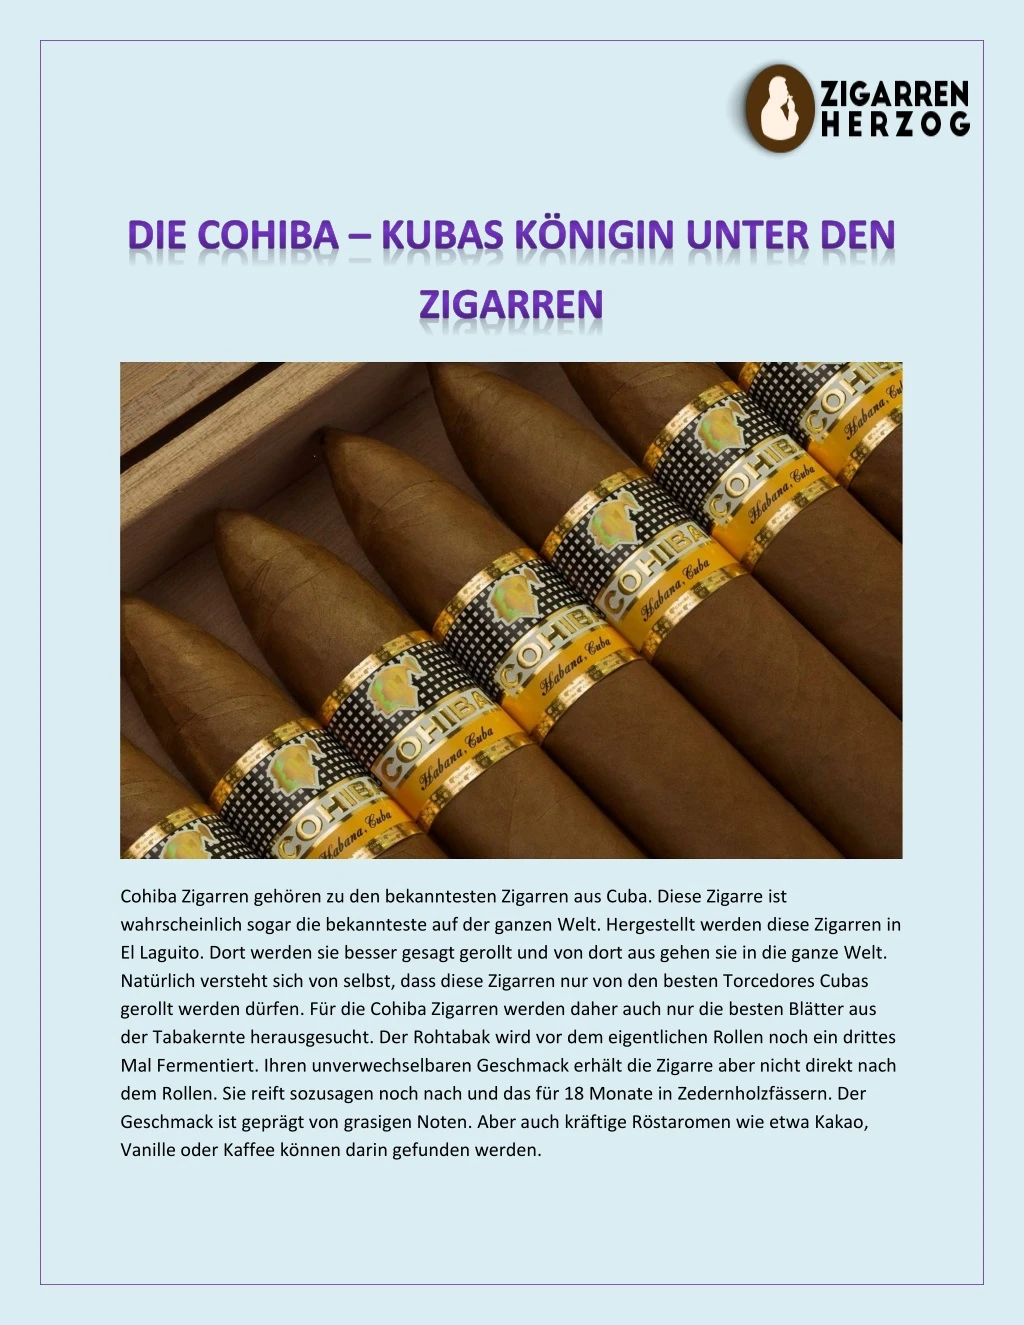 cohiba zigarren geh ren zu den bekanntesten